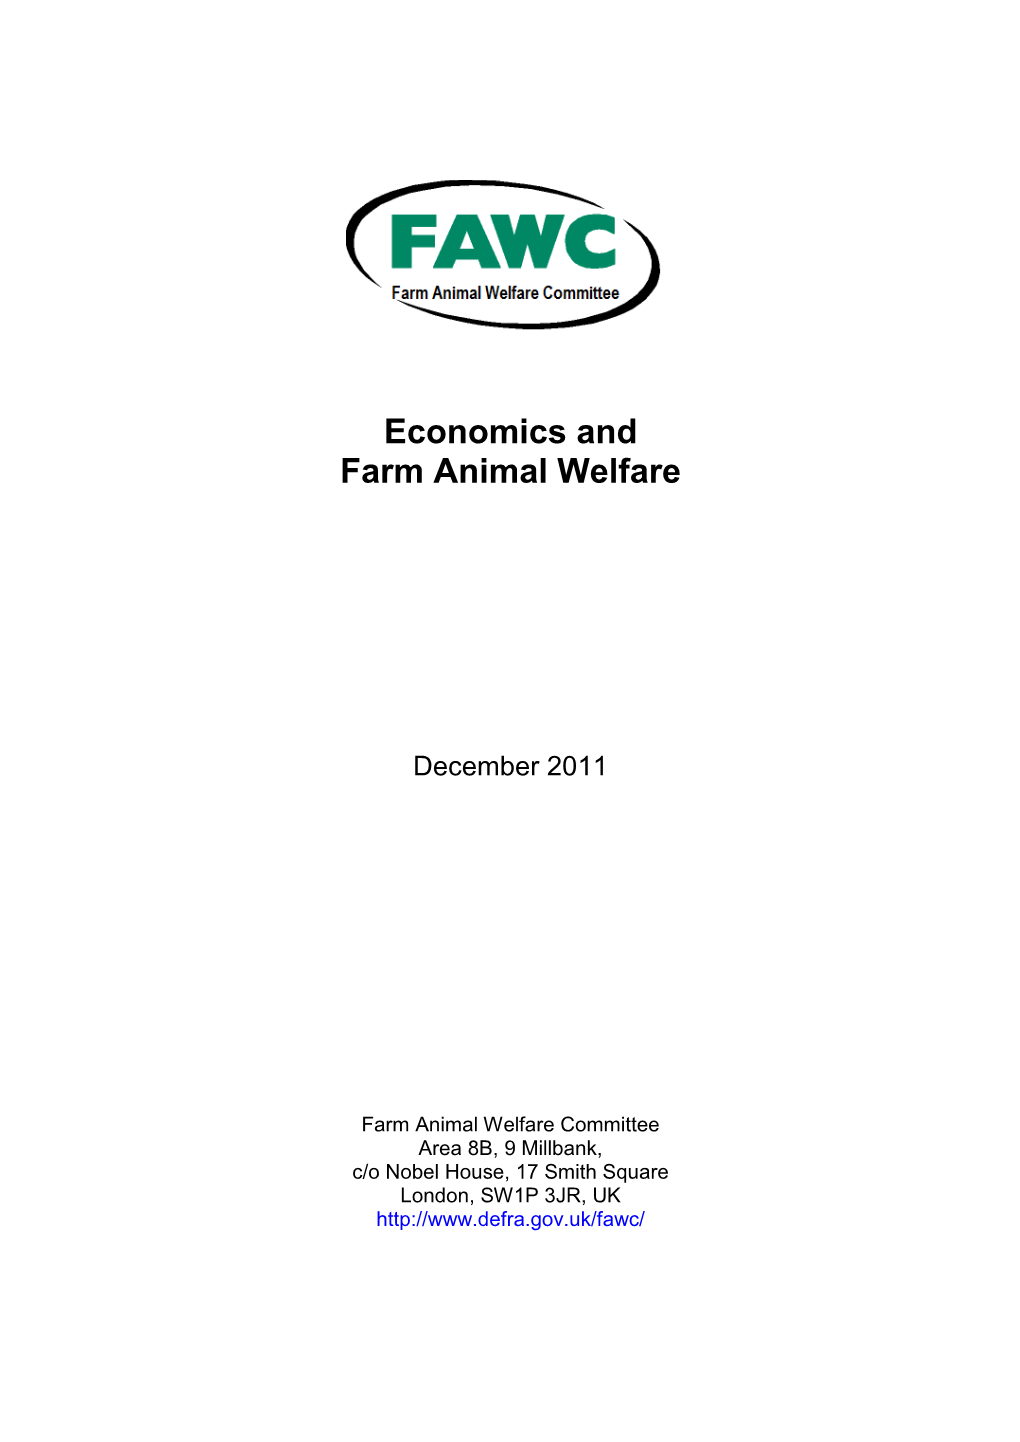 FAWC Report on Economics and Farm Animal Welfare